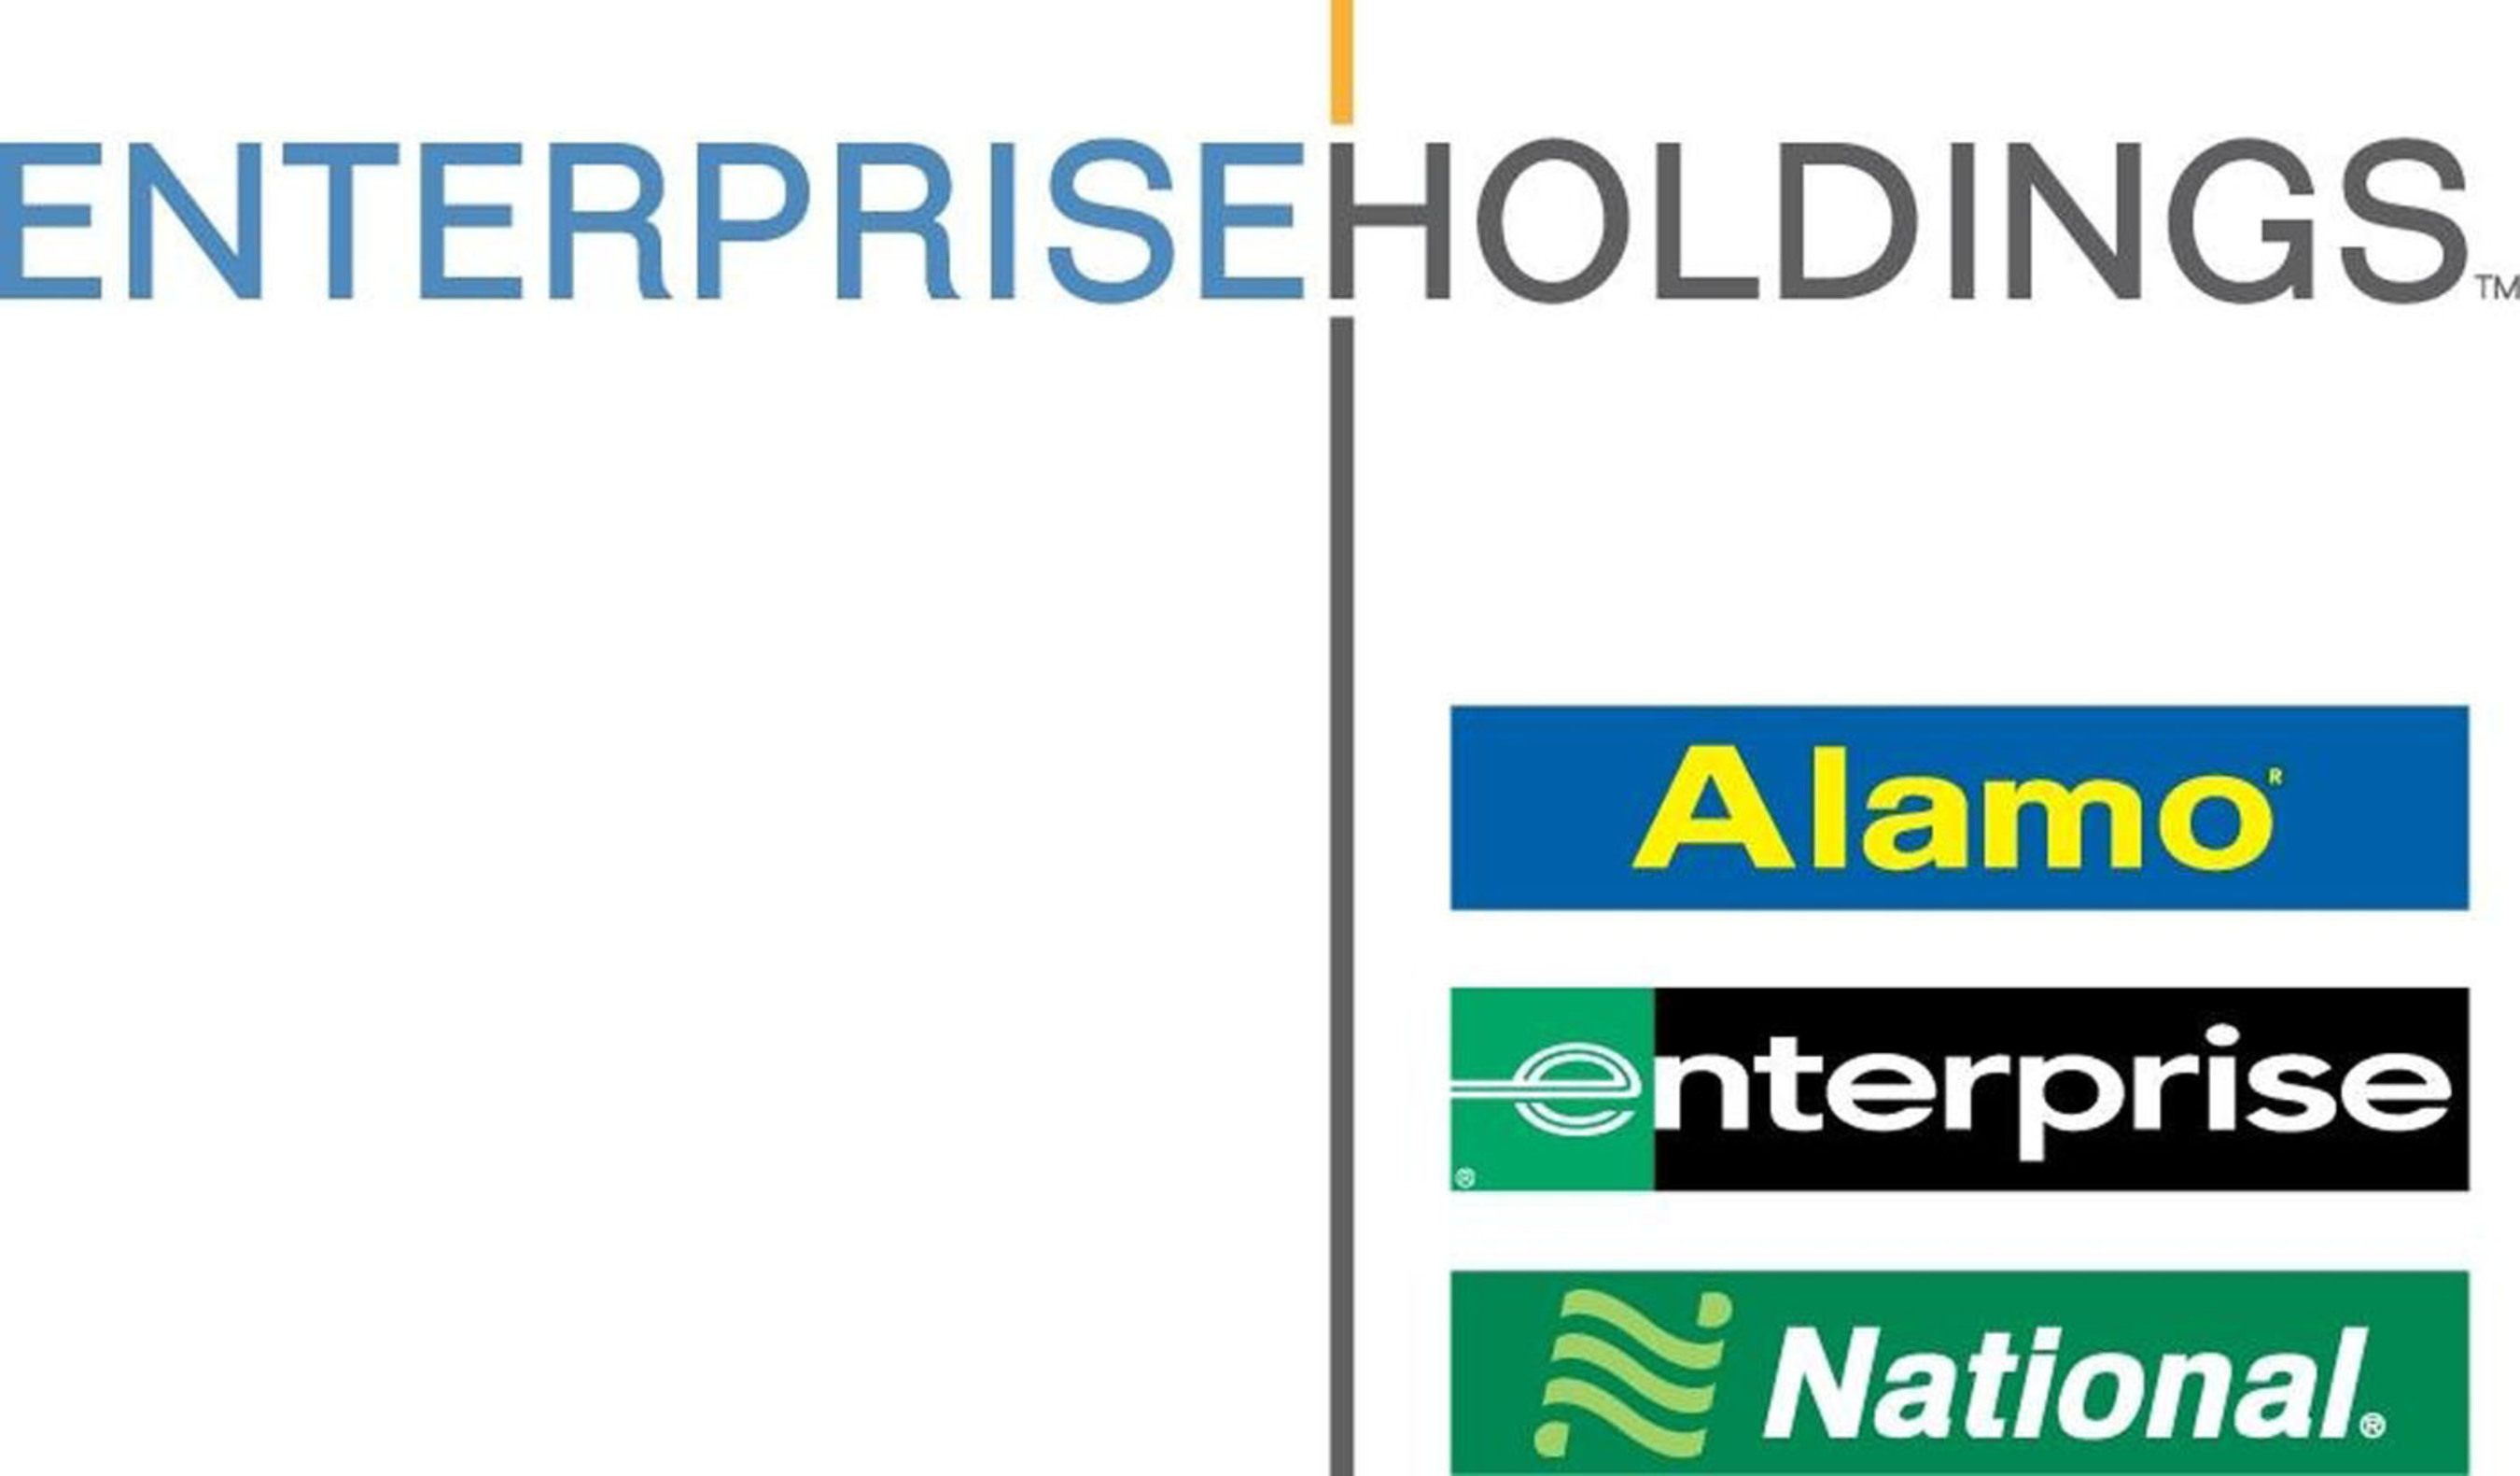 Enterprise Holdings Corporate Brands Logo